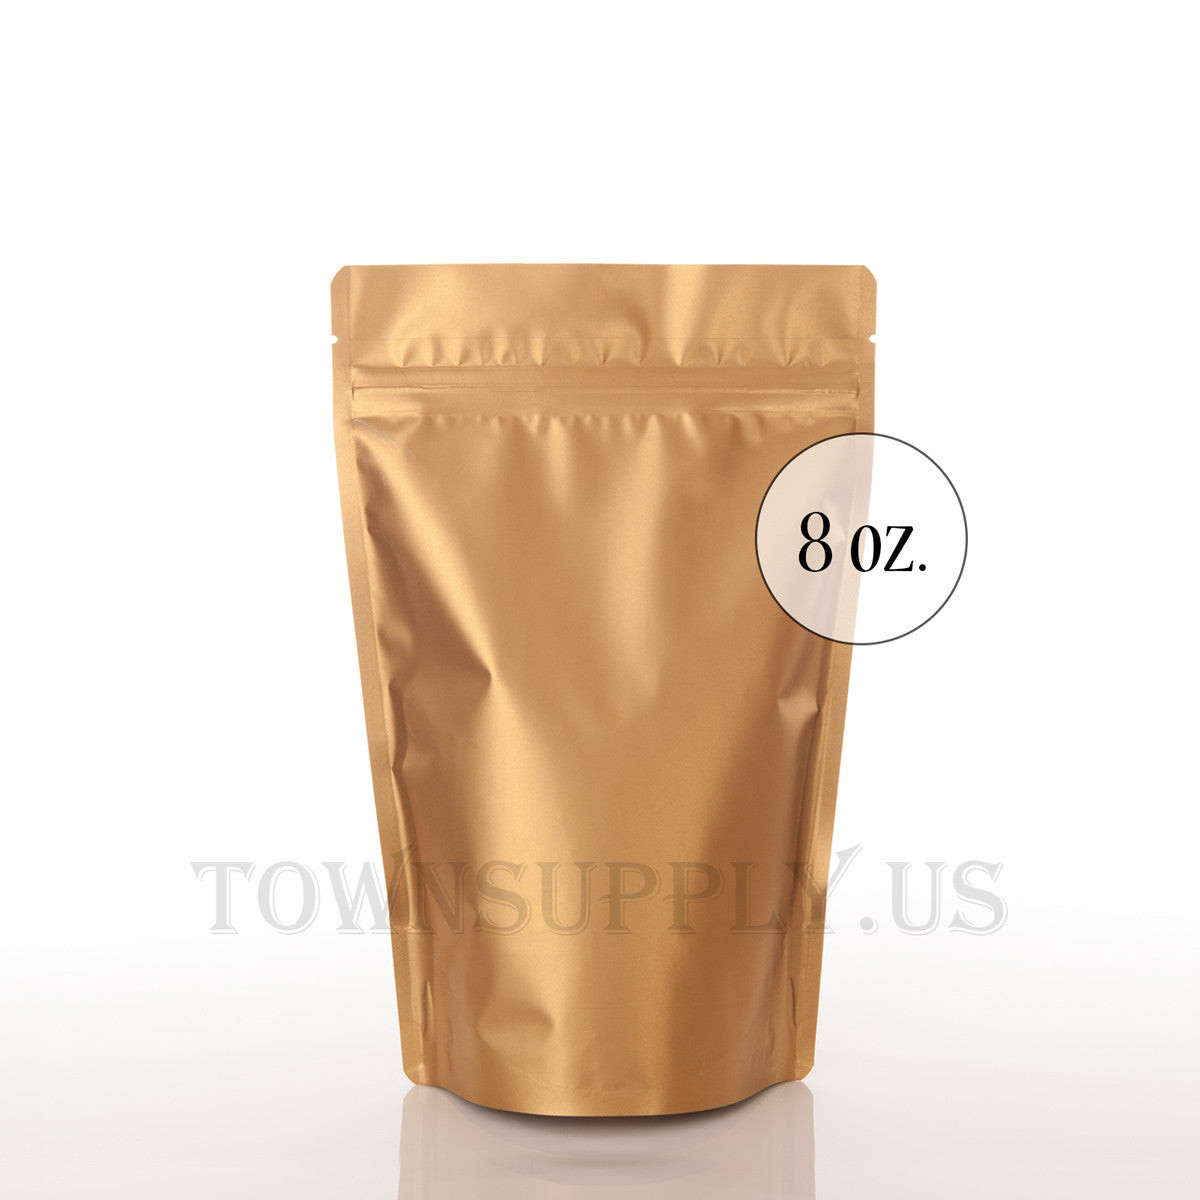 Stand Up Pouches - 2 oz, Gold, High Barrier, Coffee, Teas [ZBGM2G]